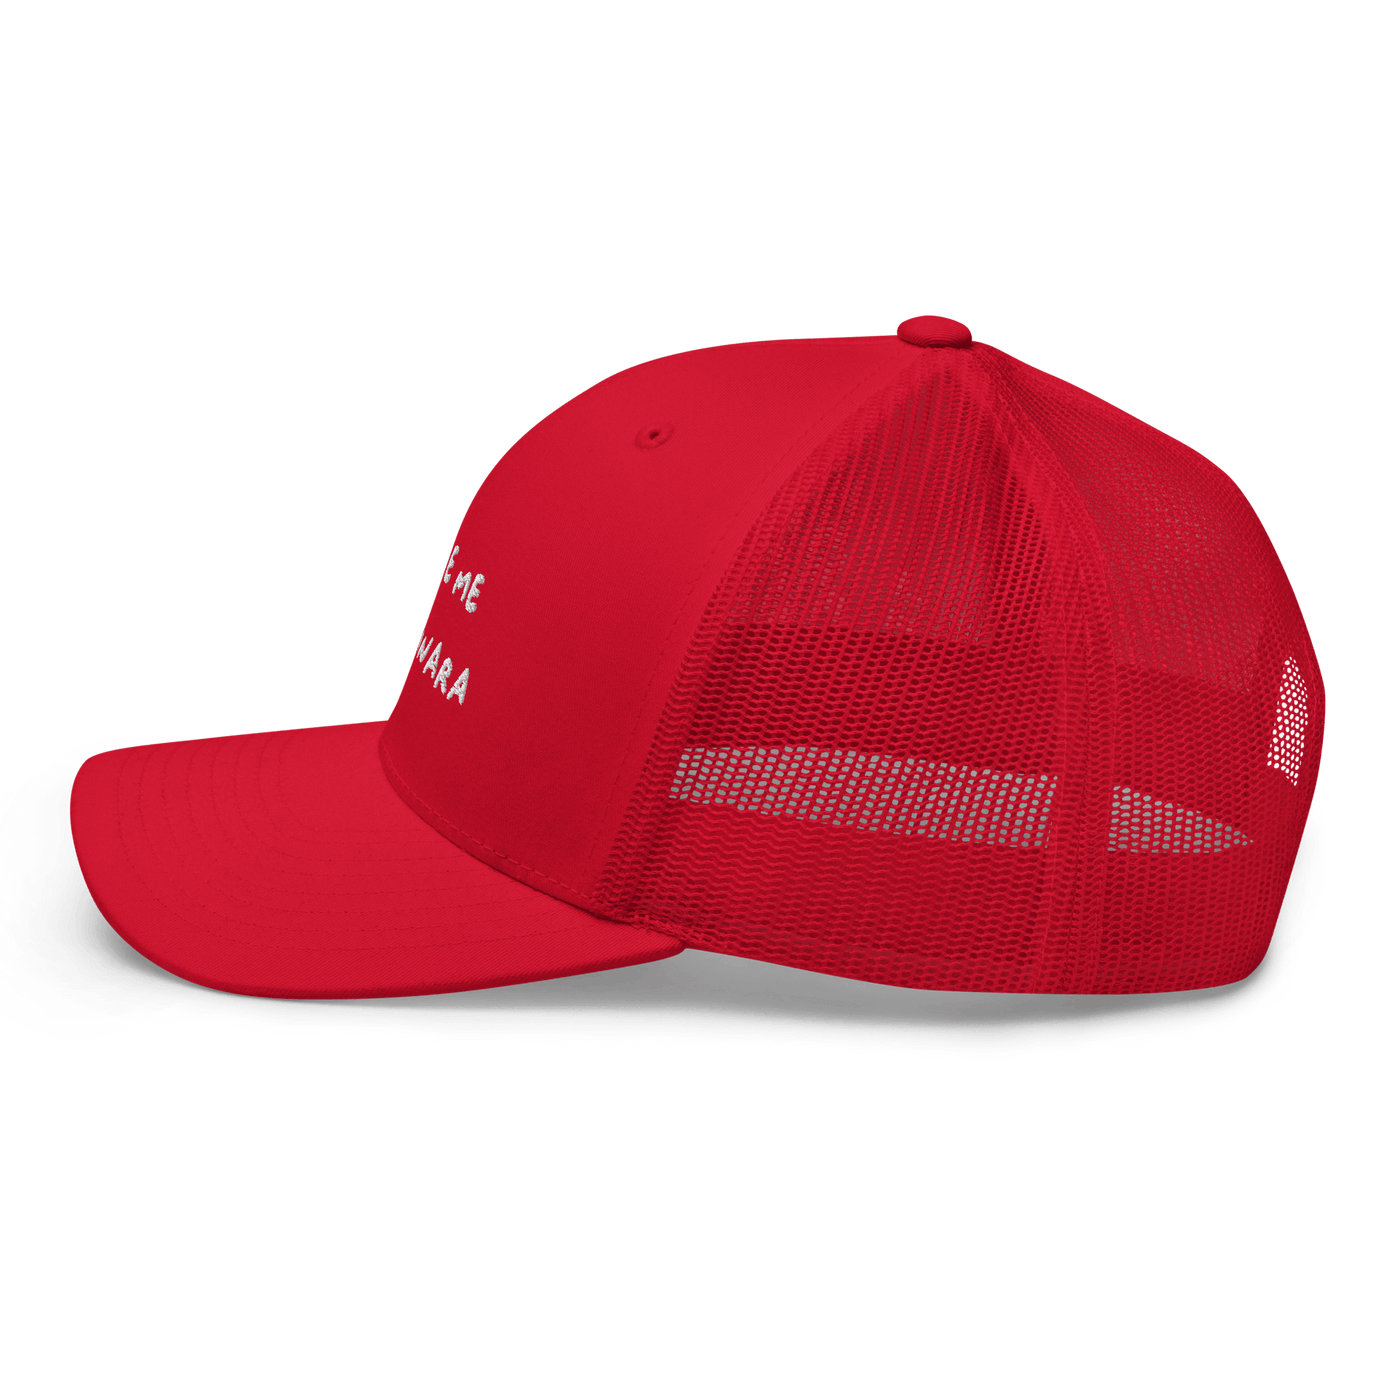 Make me Carbonara Trucker Cap - Red - - Just Another Cap Store